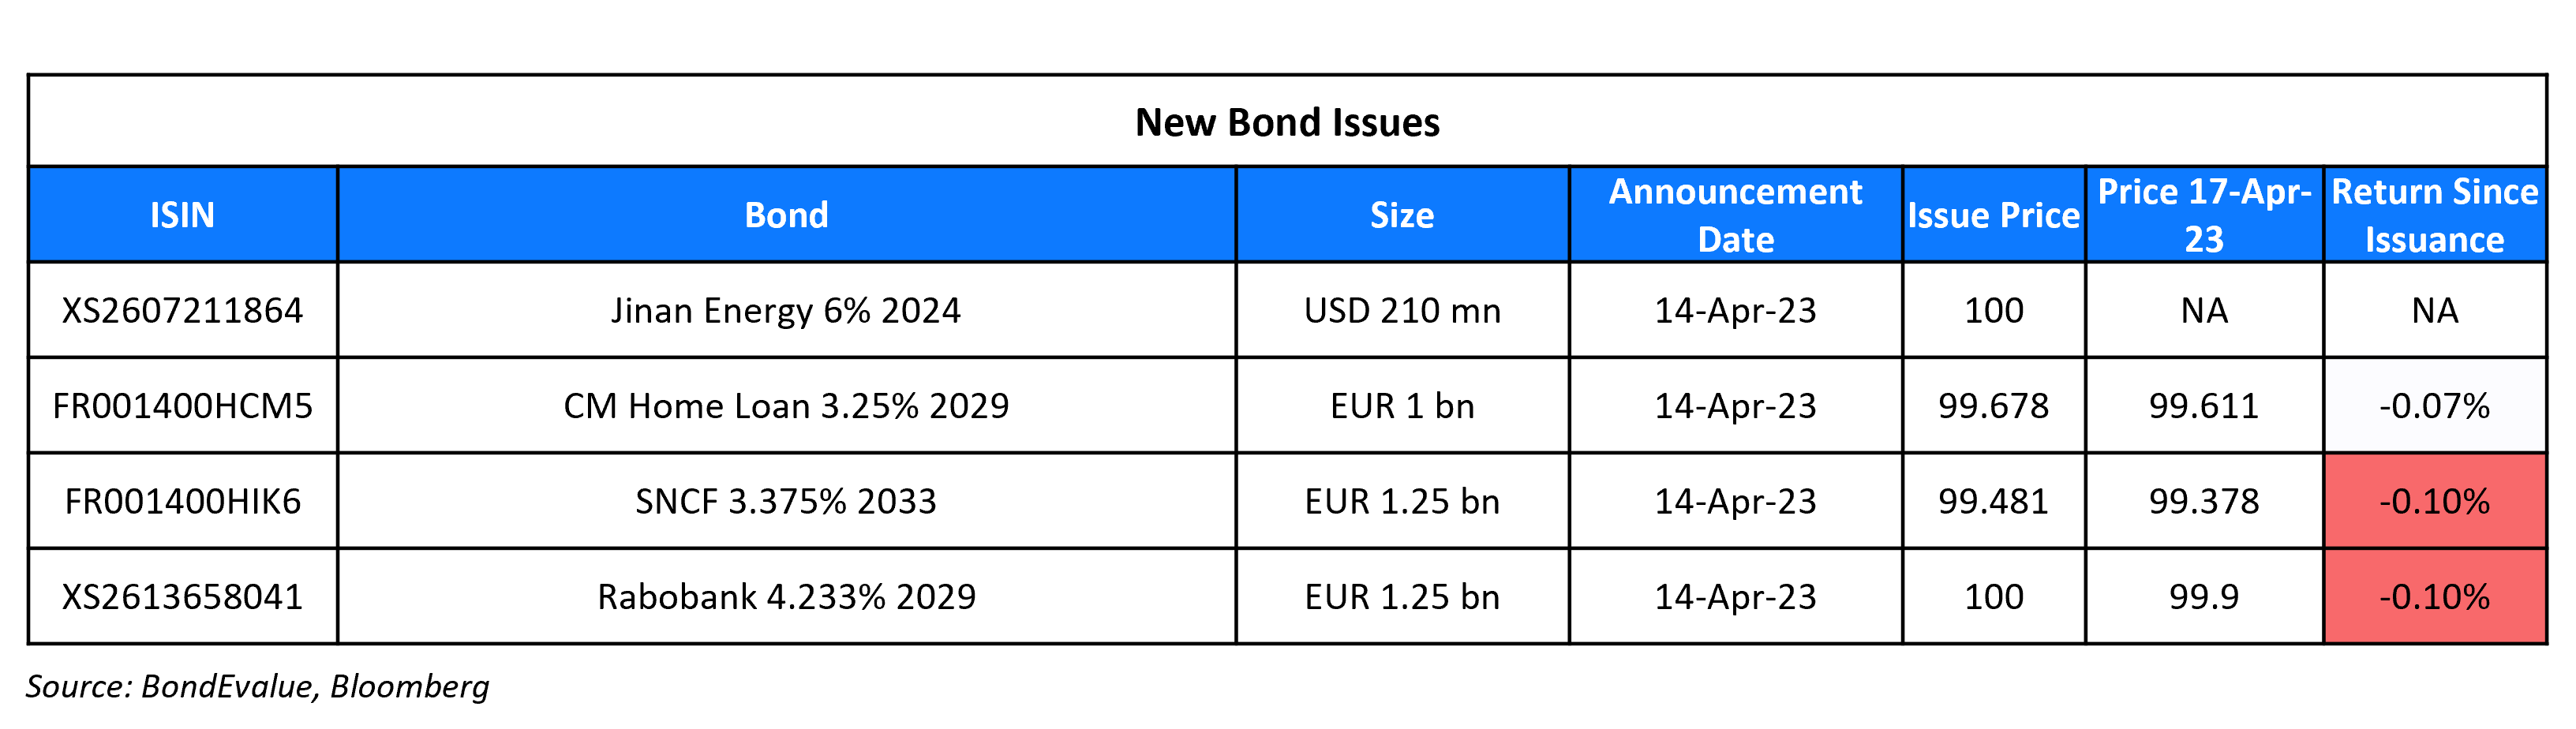 New Bond Issues 17 Apr 23